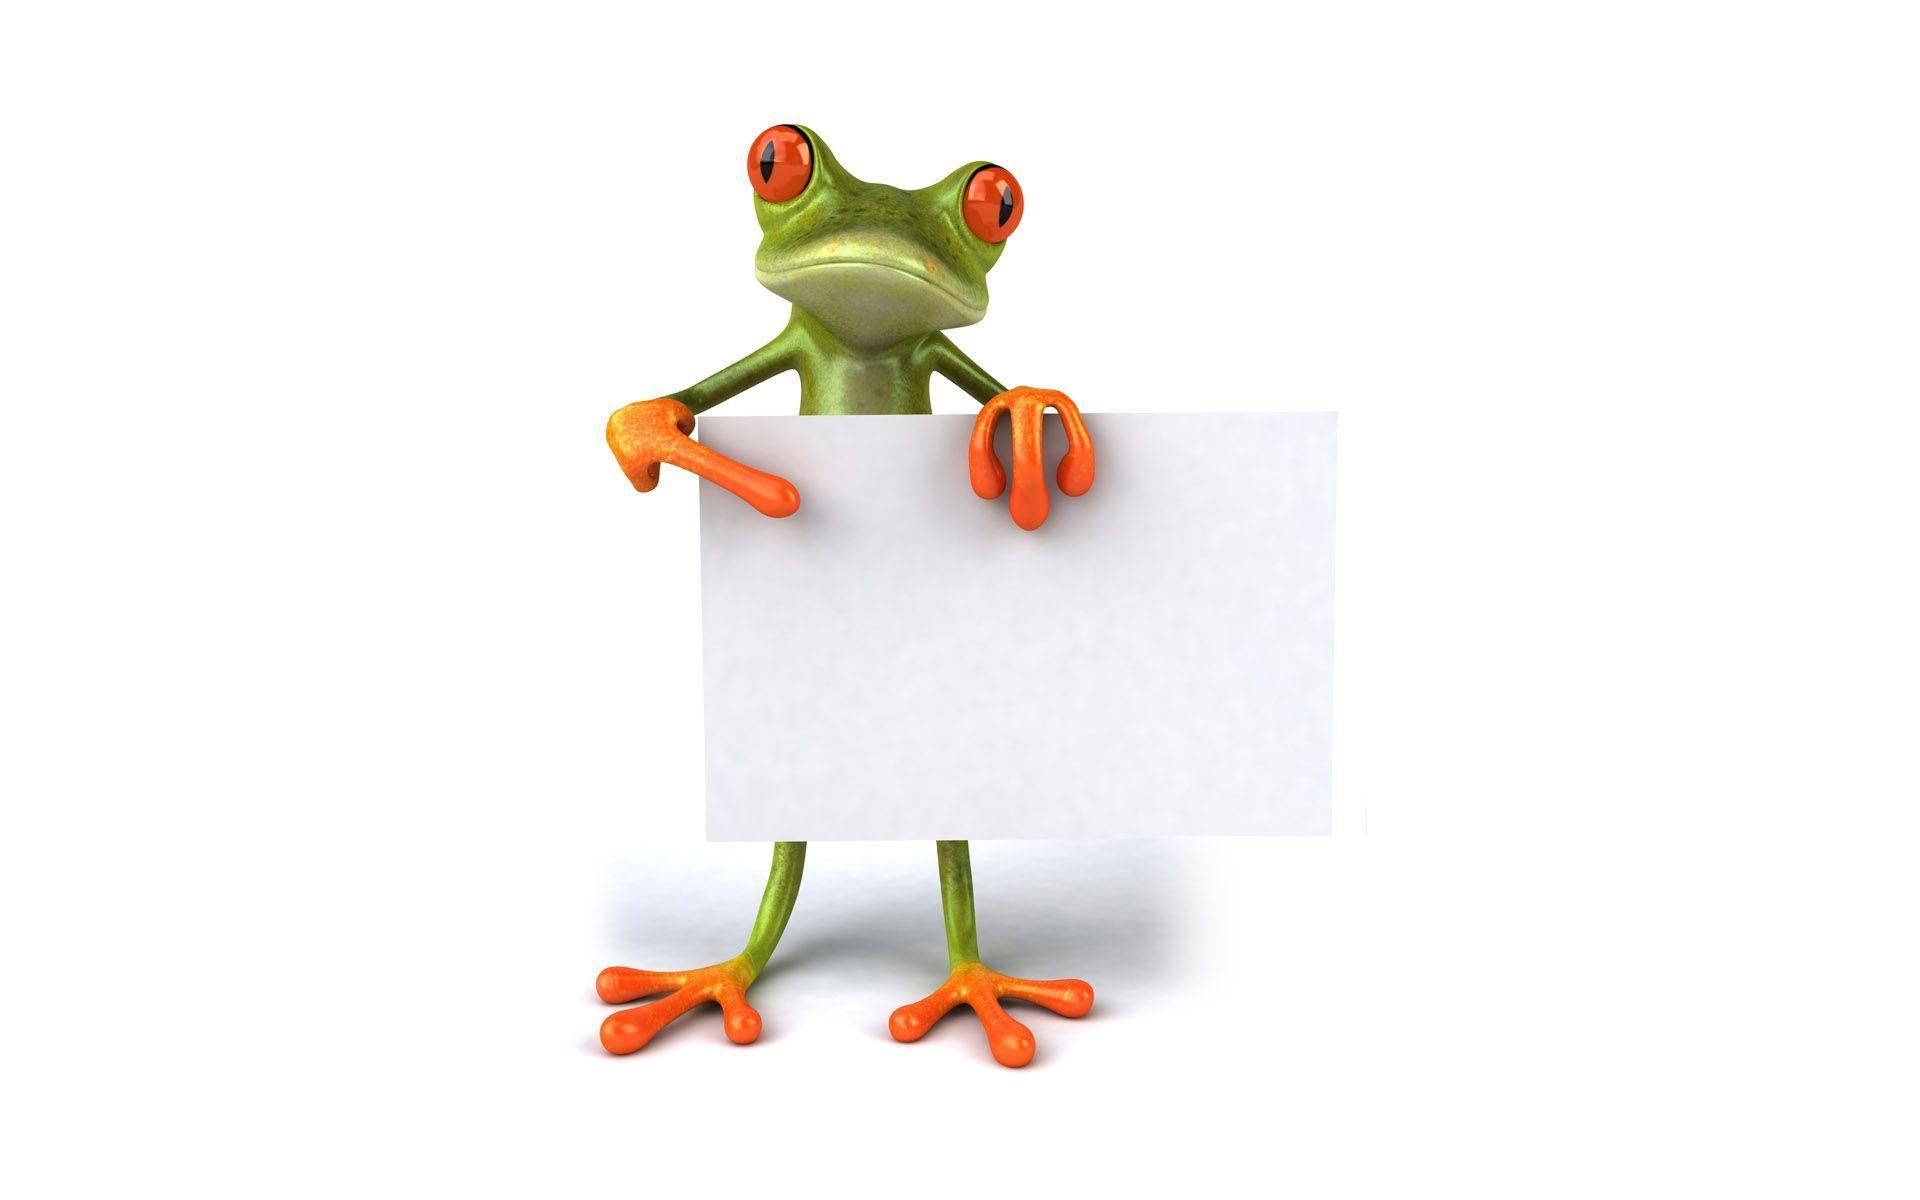 Free frog 3D wallpaper for desktop Wallpaper Wallpaper 81222